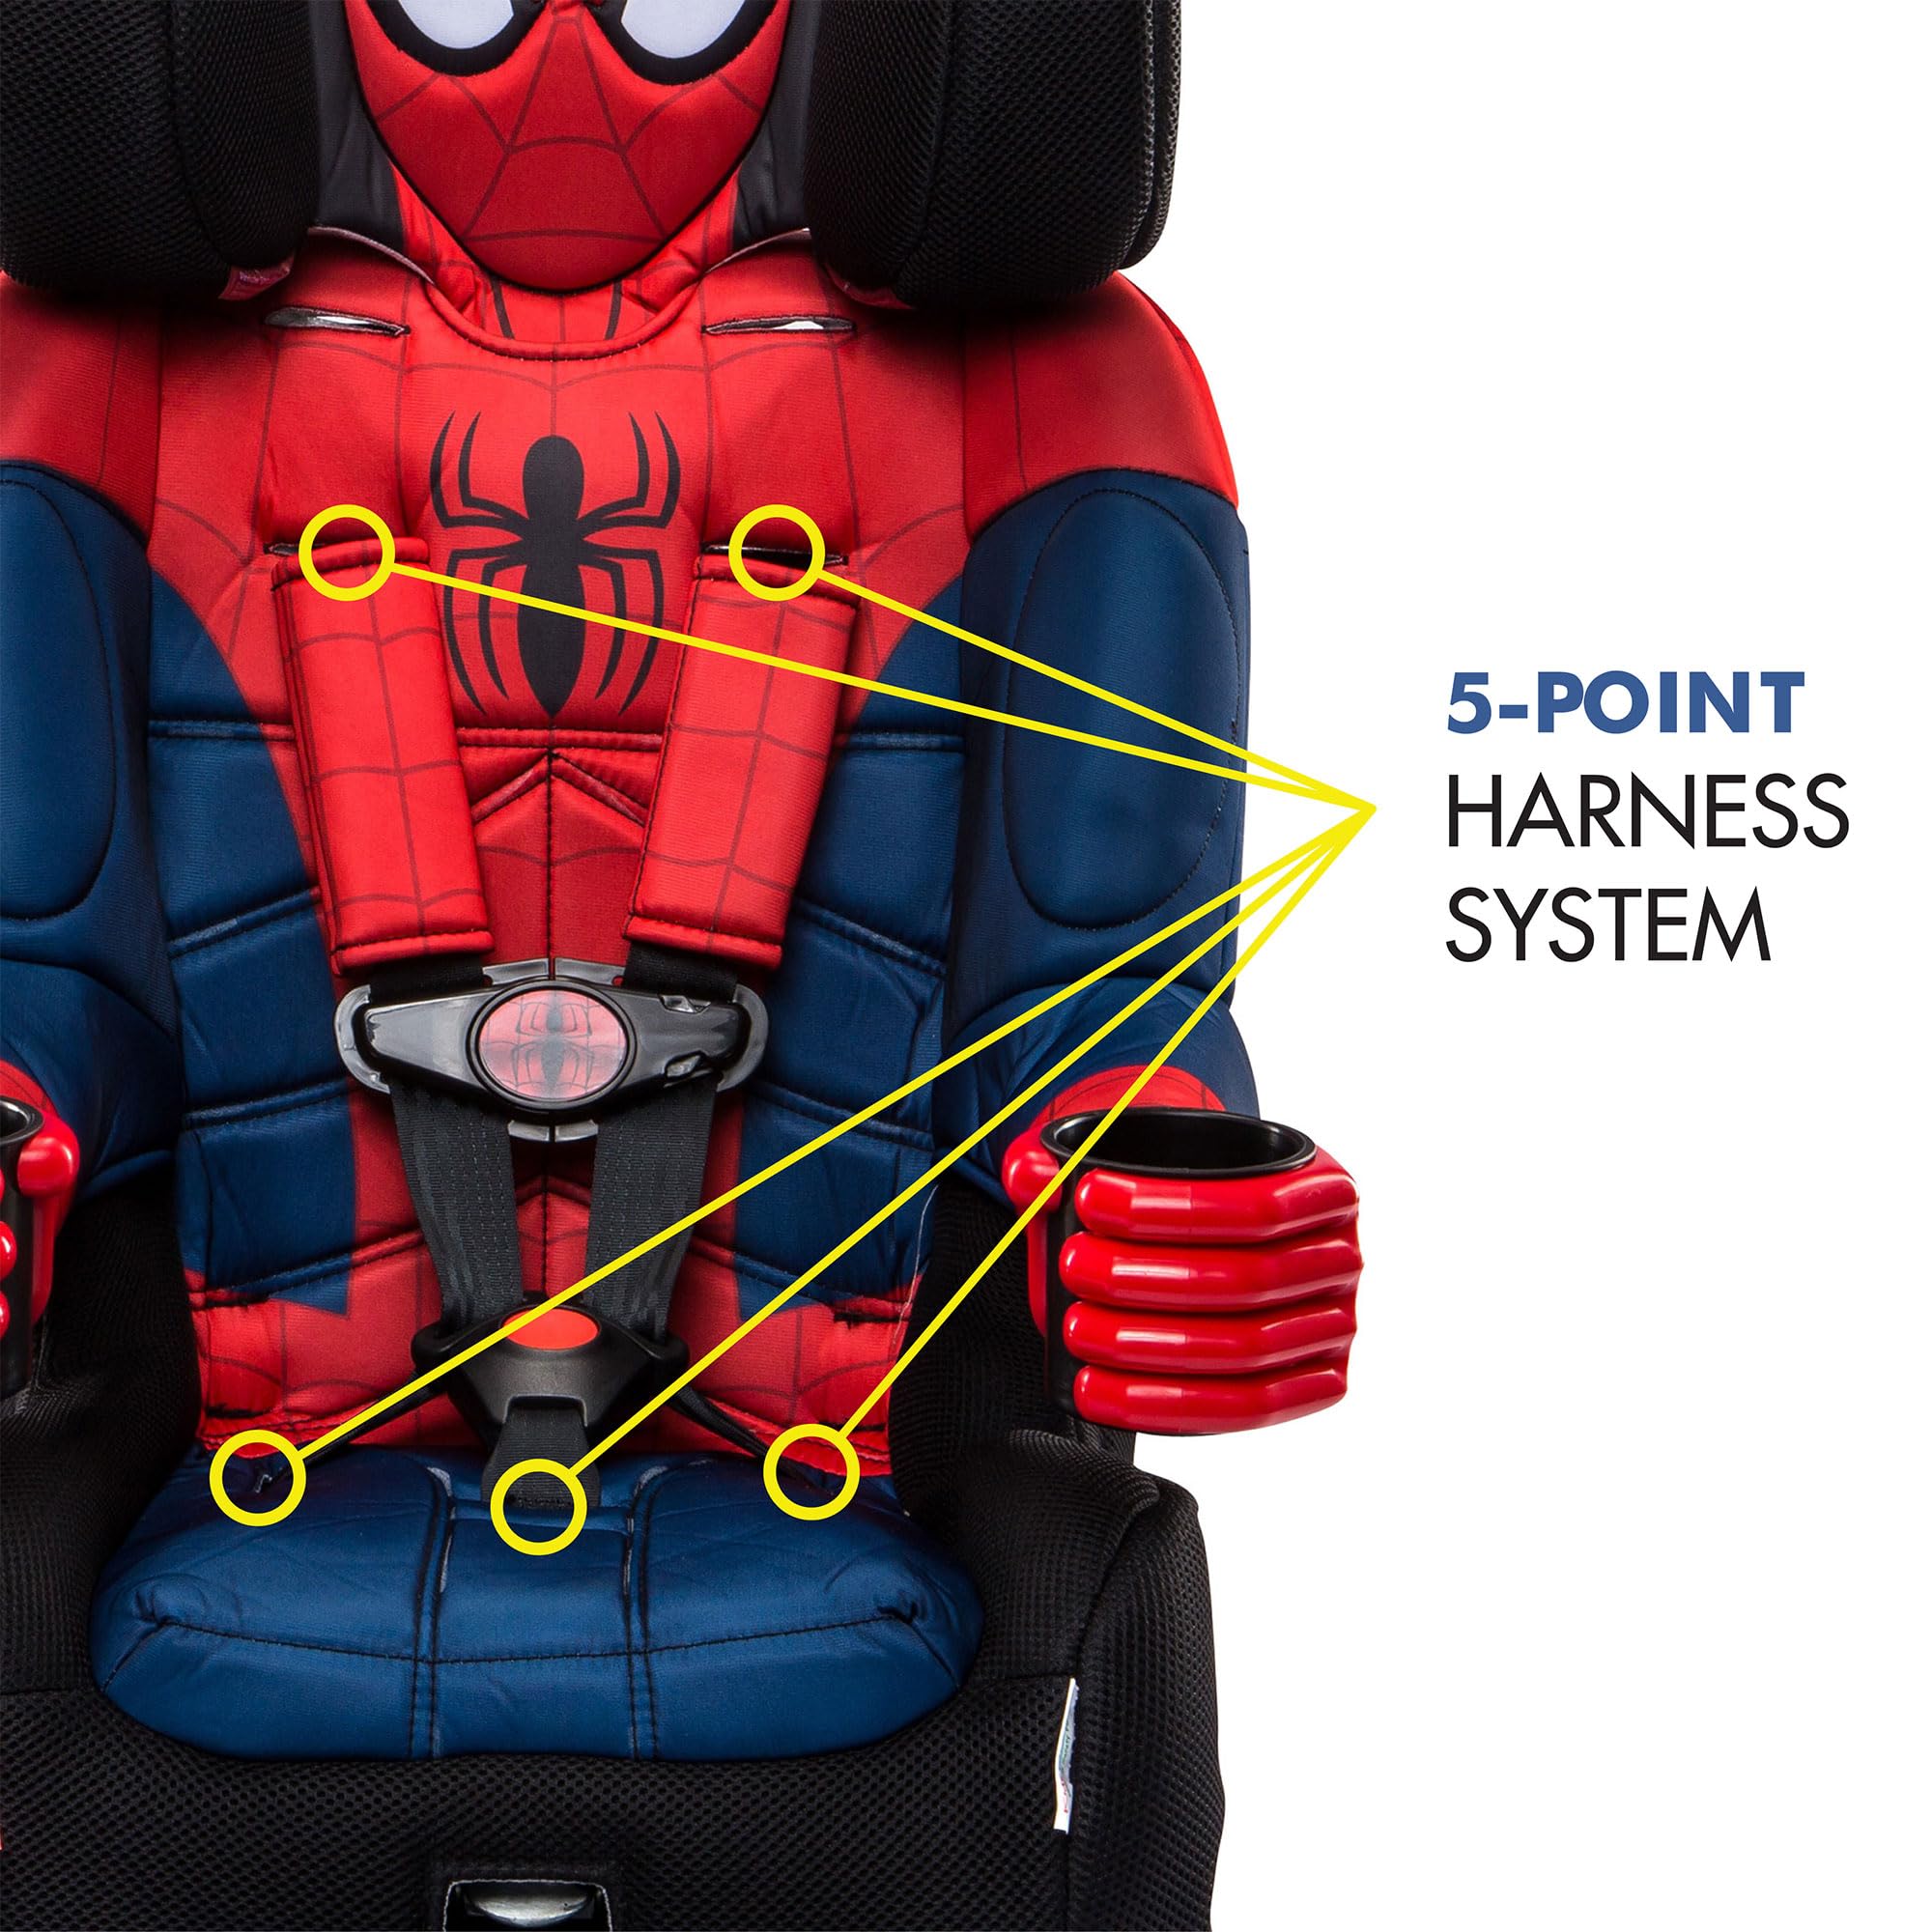 KidsEmbrace Marvel Spider-Man 2-in-1 Forward Facing Booster Car Seat, Red/Blue/Black